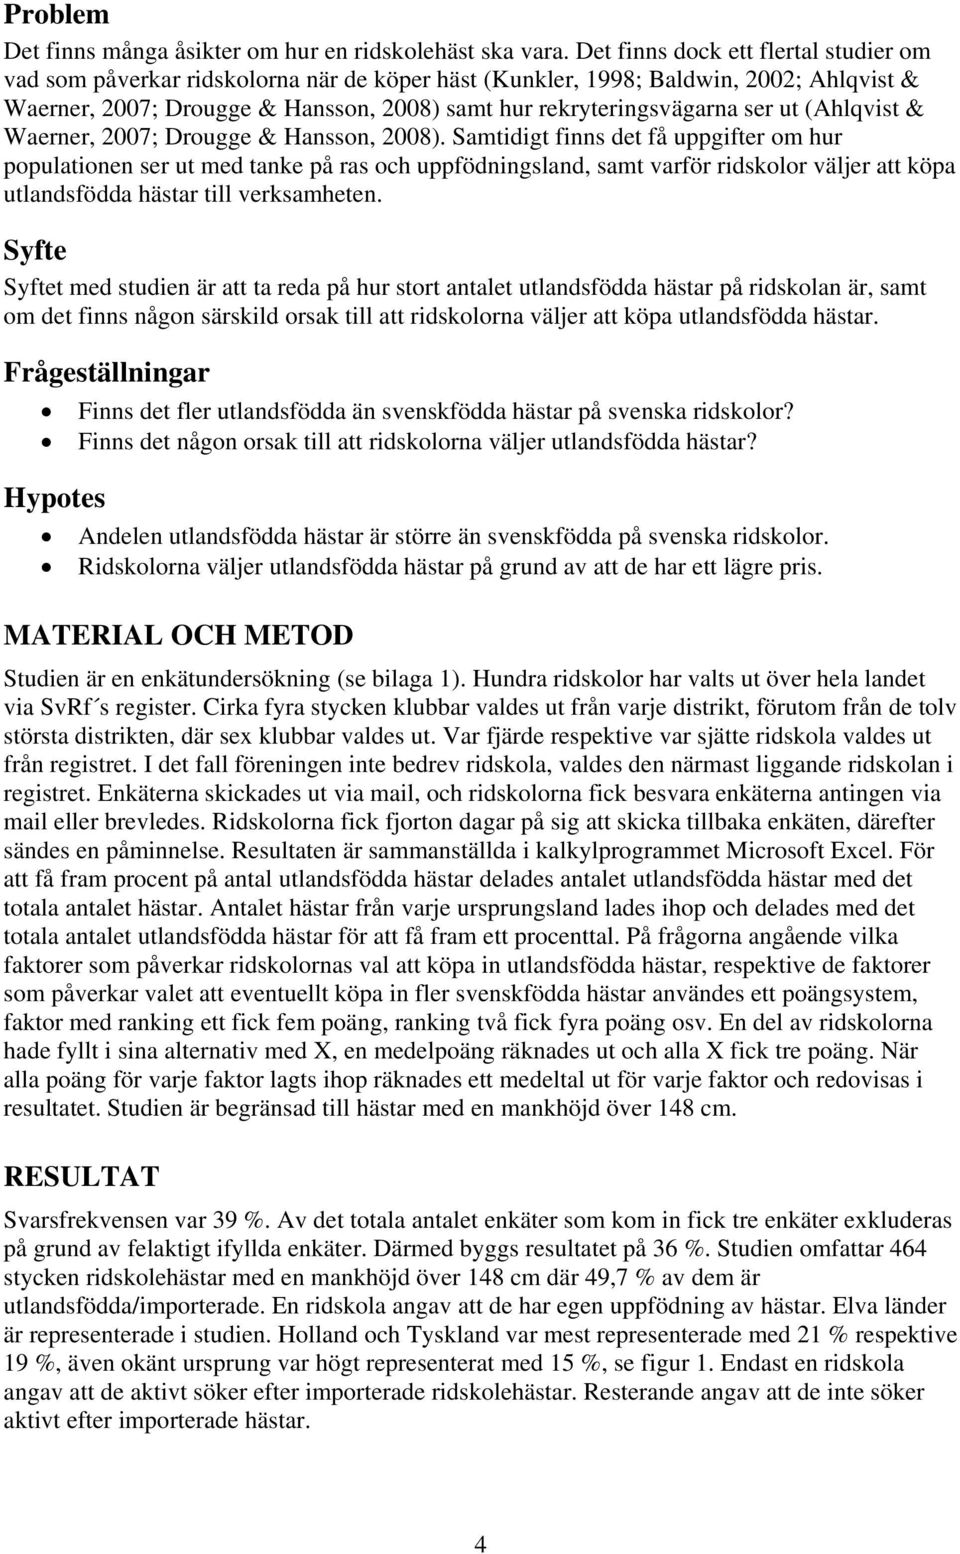 ut (Ahlqvist & Waerner, 2007; Drougge & Hansson, 2008).